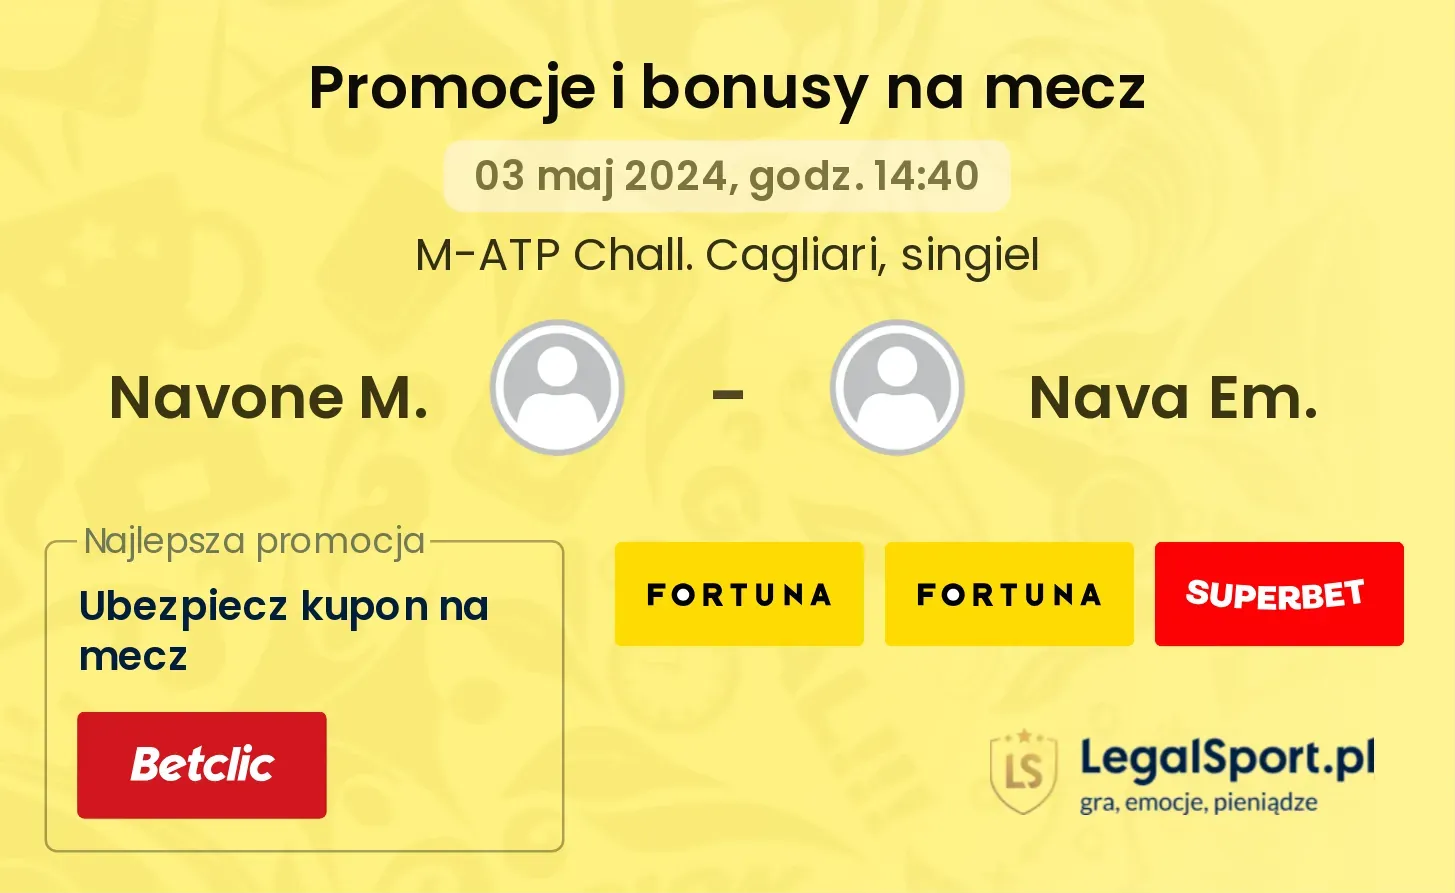 Navone M. - Nava Em. promocje bonusy na mecz